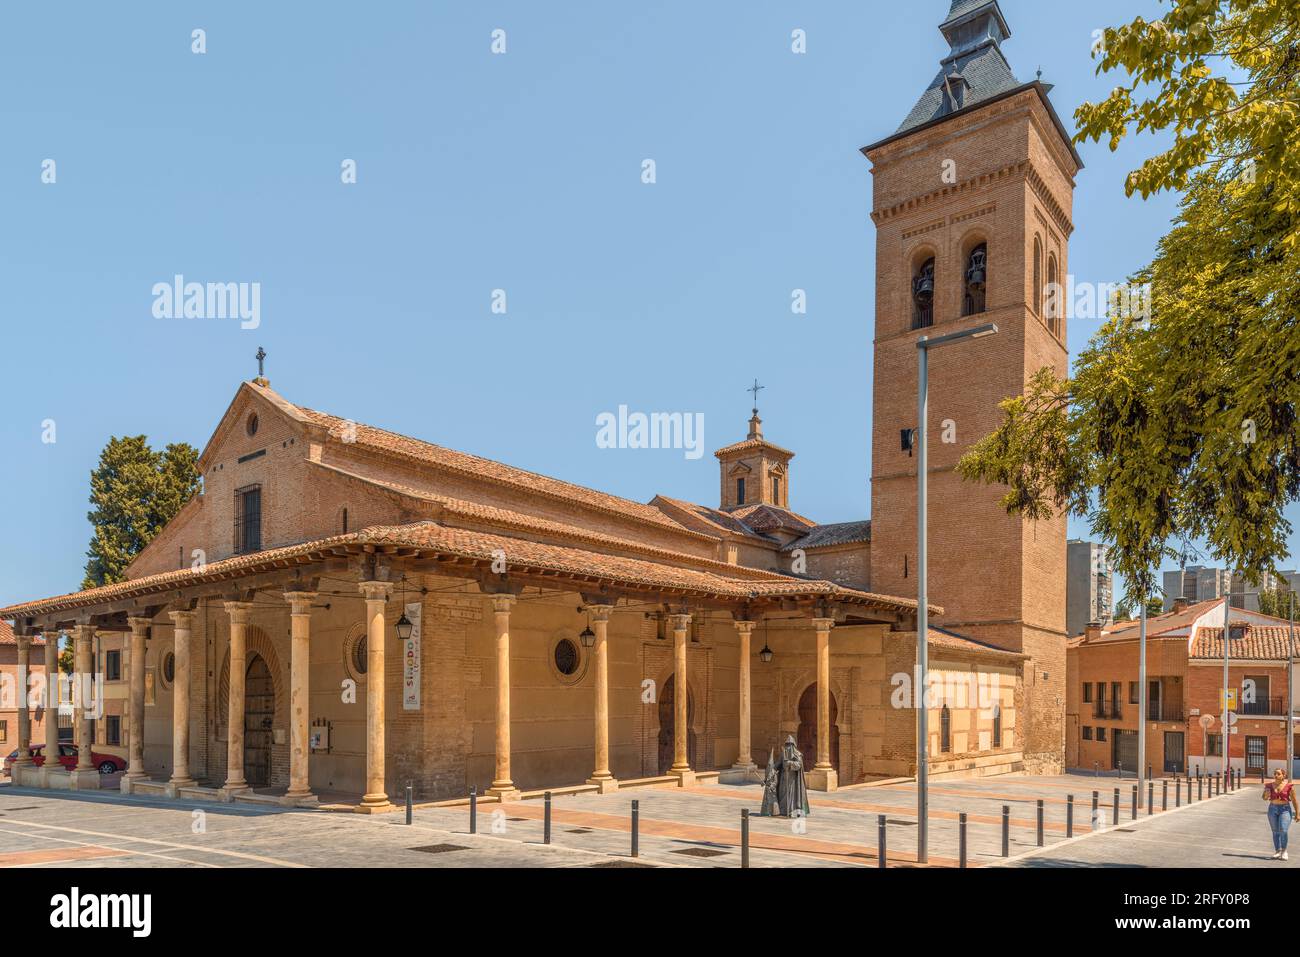 Co-Cathédrale de Santa María, église de la religion catholique chrétienne de Guadalajara, Castilla la Mancha, Espagne, Europe. Banque D'Images